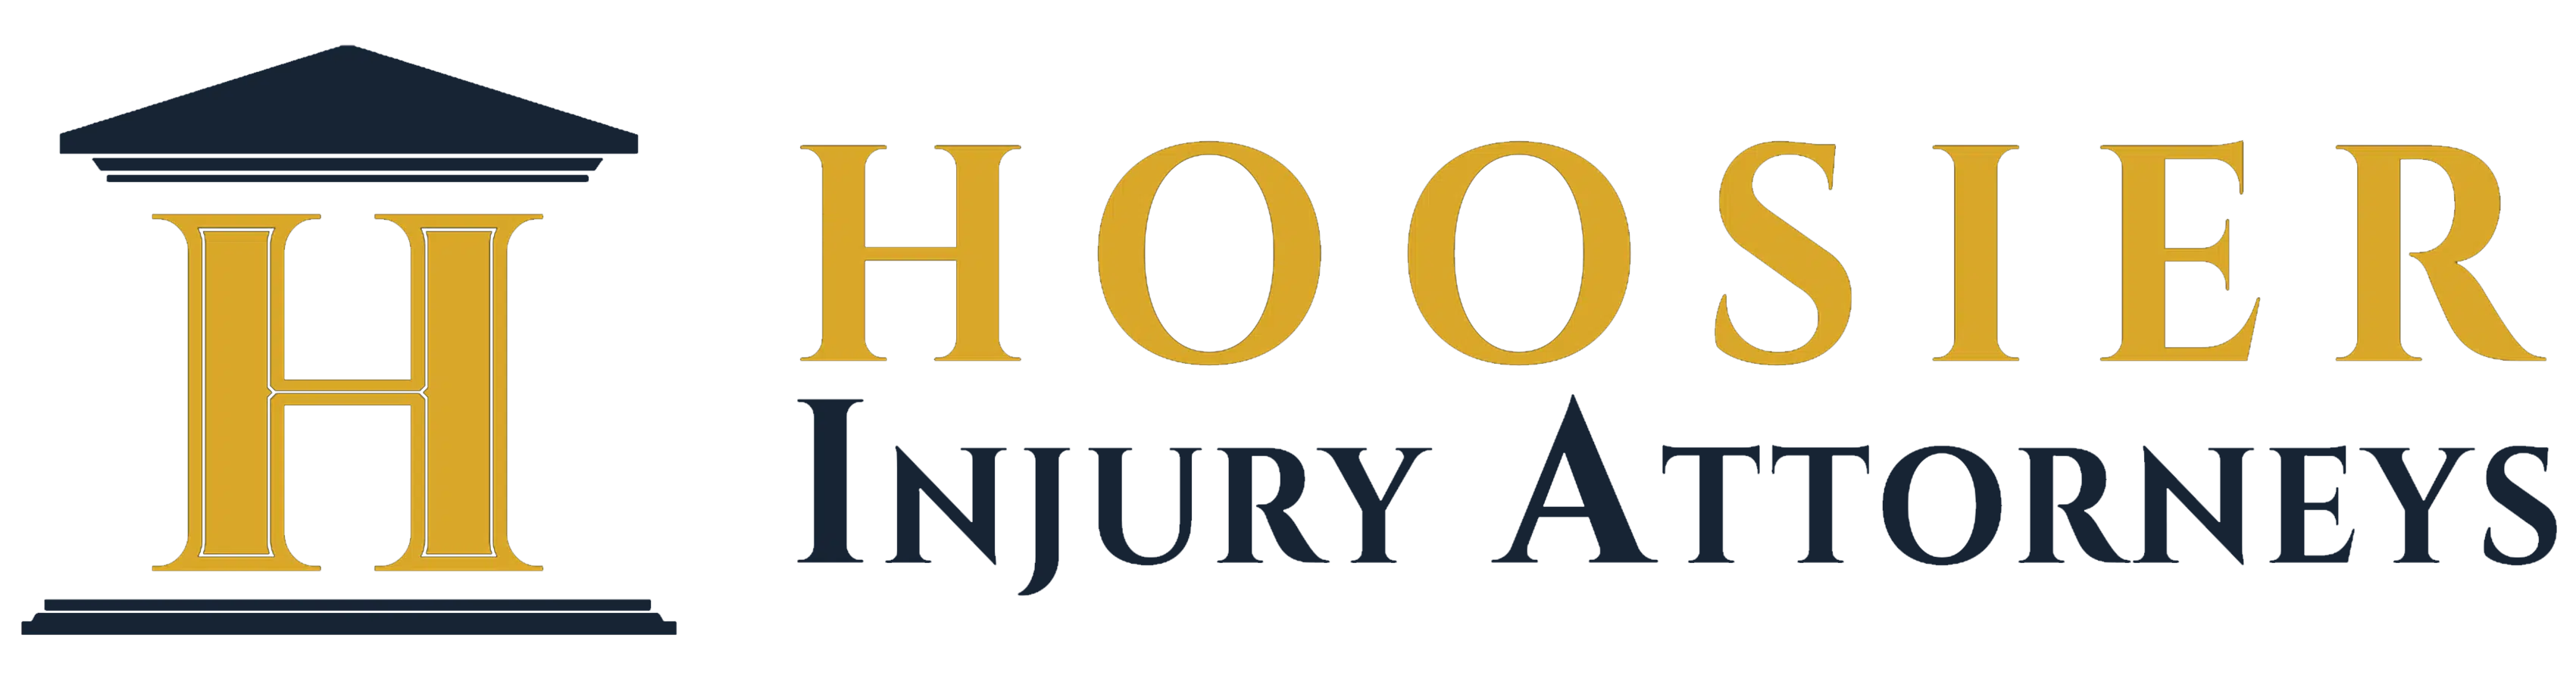 Hoosier Injury Attorneys Logo